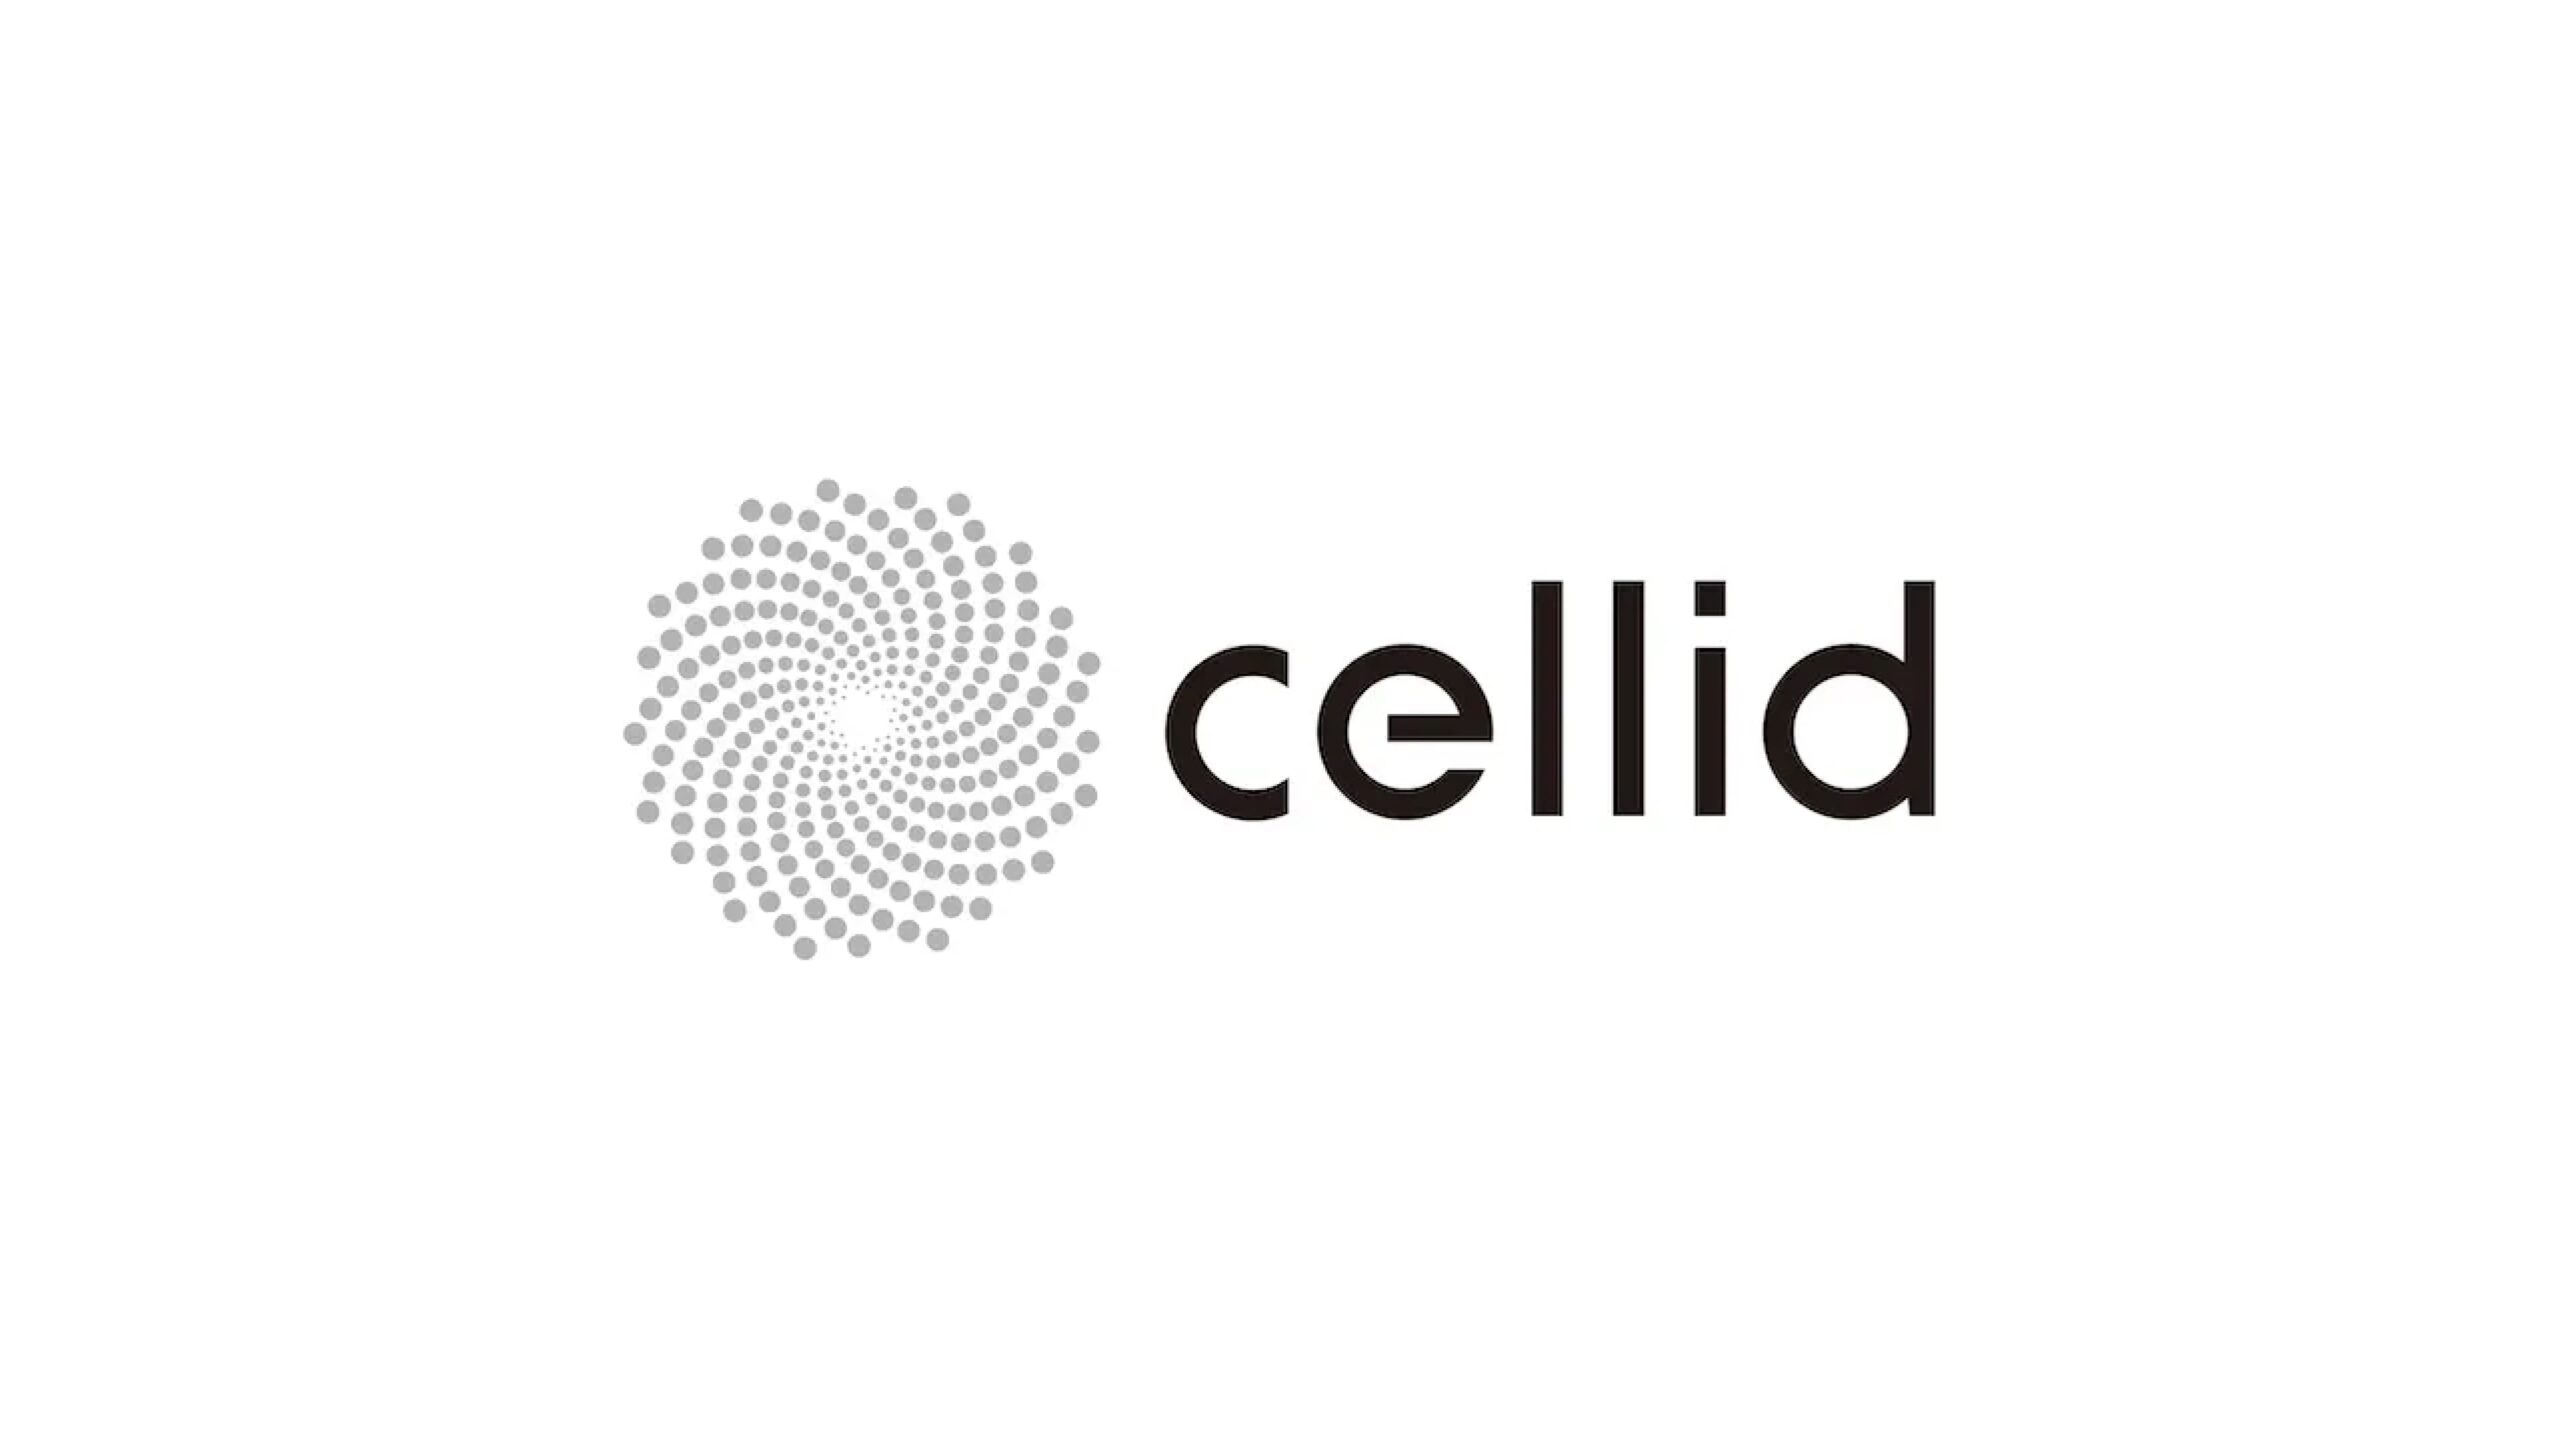 Cellid株式会社が約3.7億円の資金調達、累計調達額は約15.8億円に到達